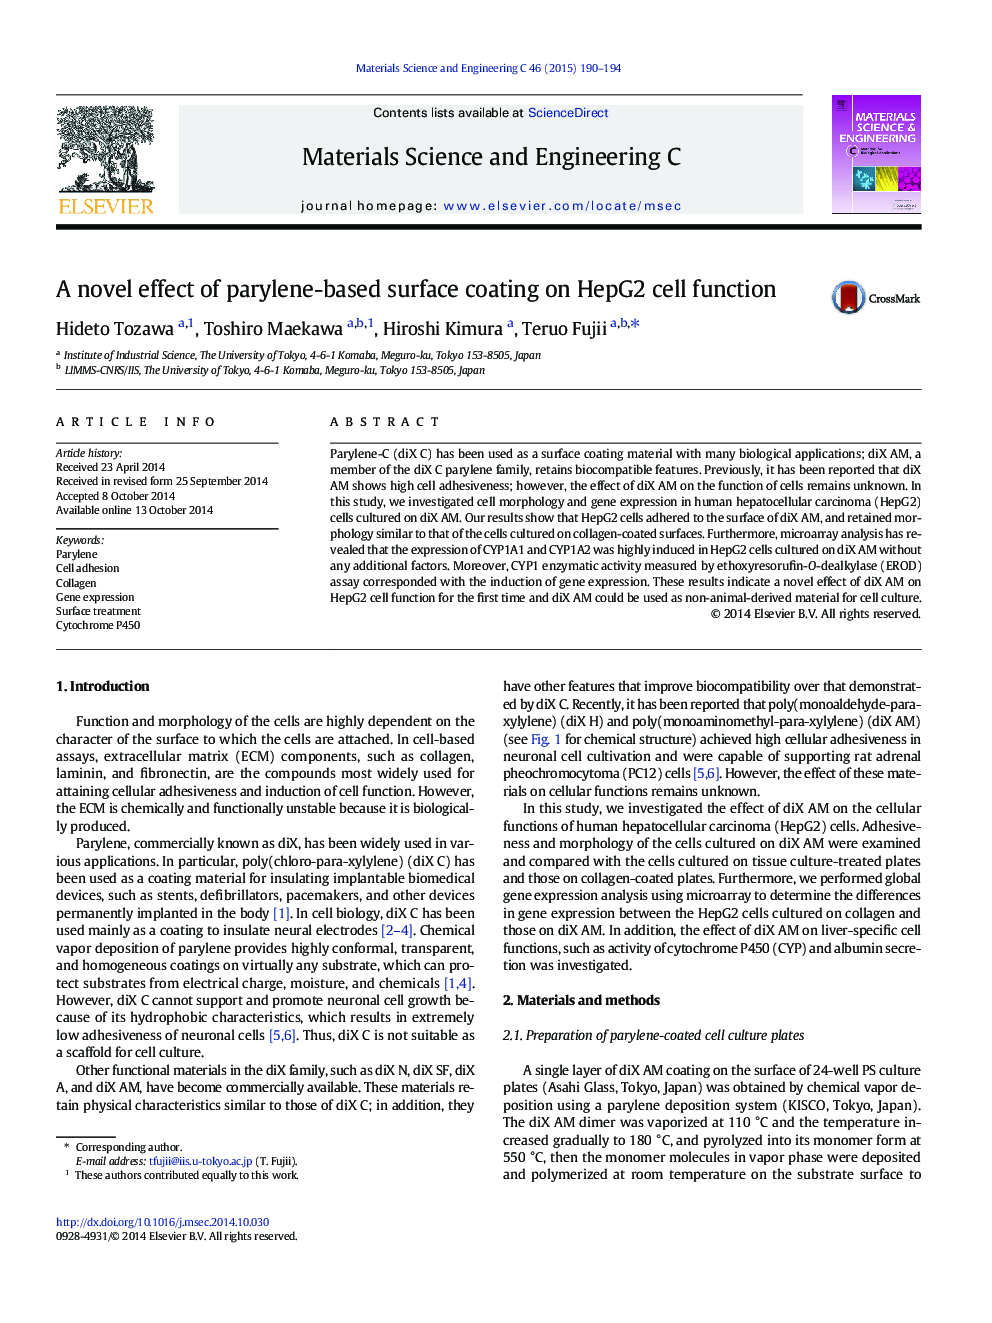 A novel effect of parylene-based surface coating on HepG2 cell function